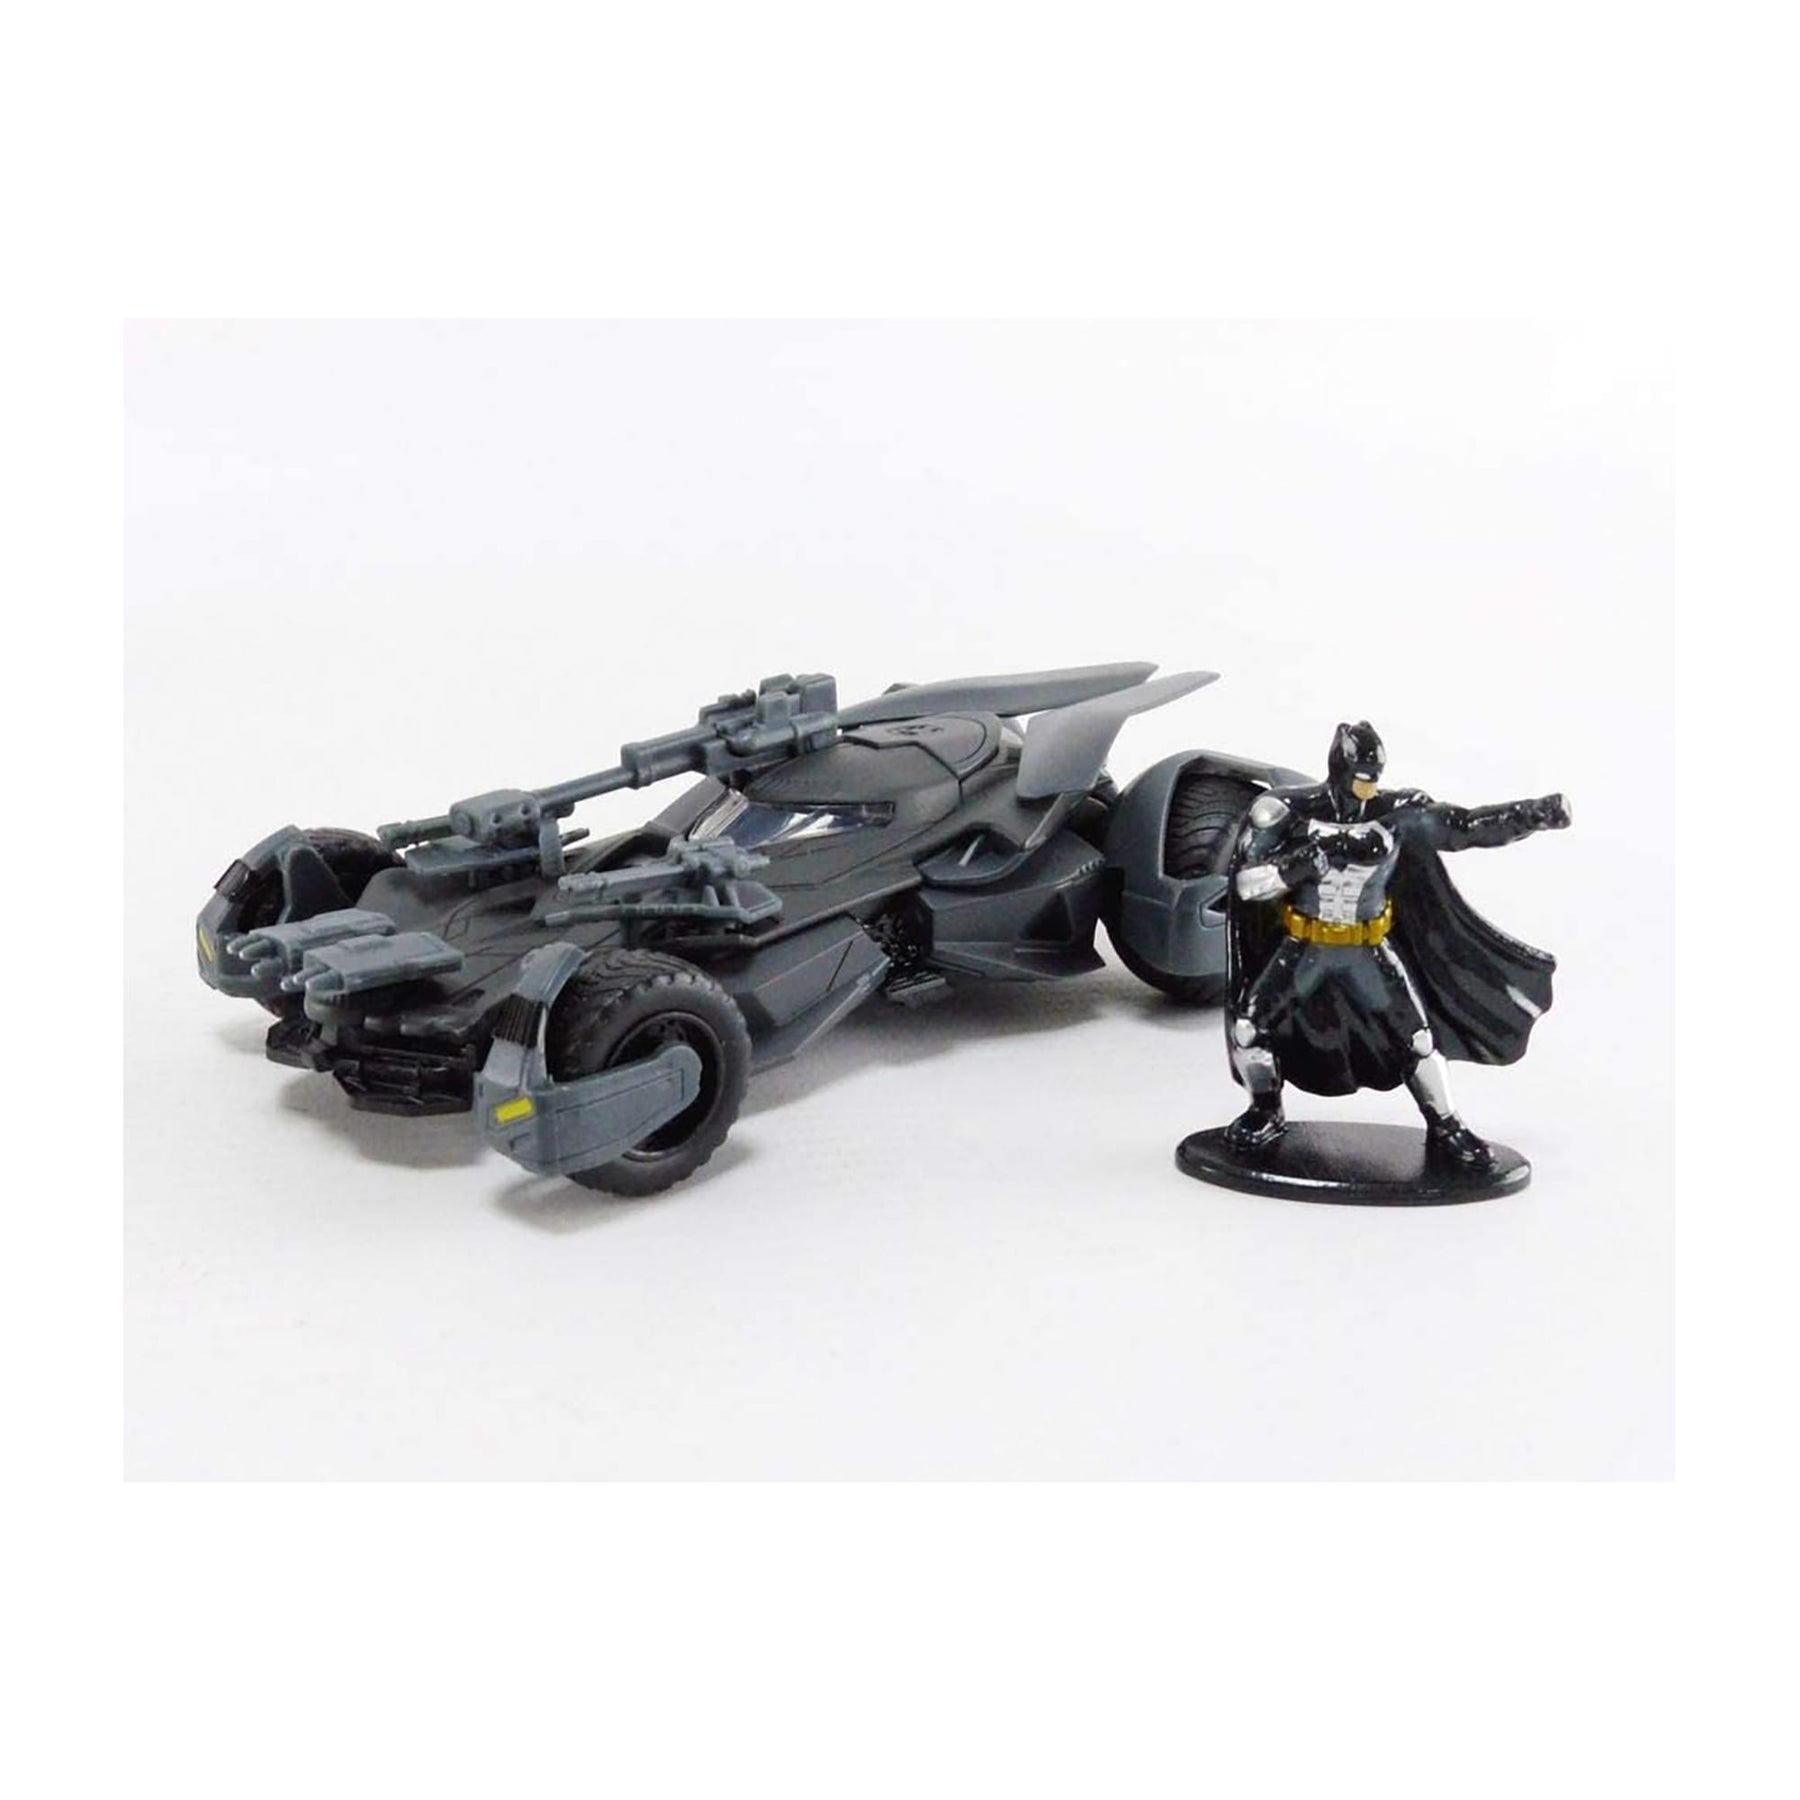 DC Comics 1:32 Batman 2017 Justice League Batmobile Diecast Car and Figure